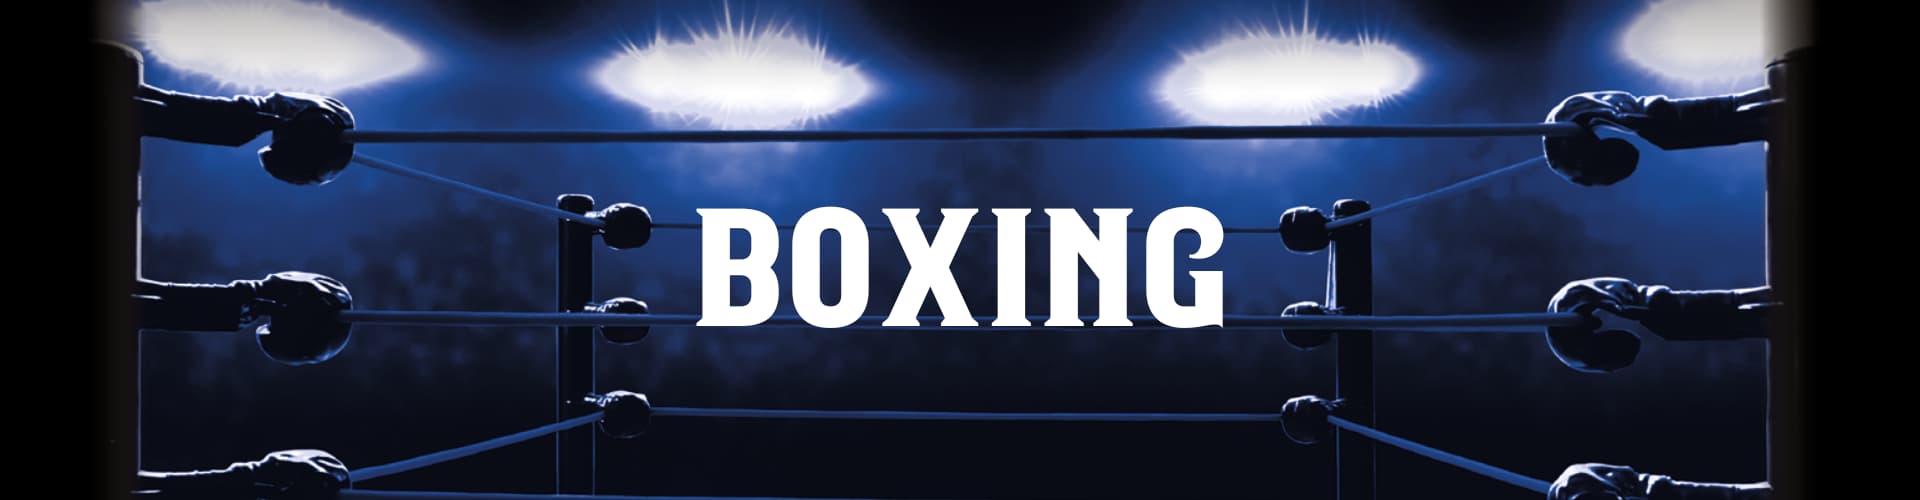 Watch Live Boxing in Birmingham at Sacks of Potatoes Pub